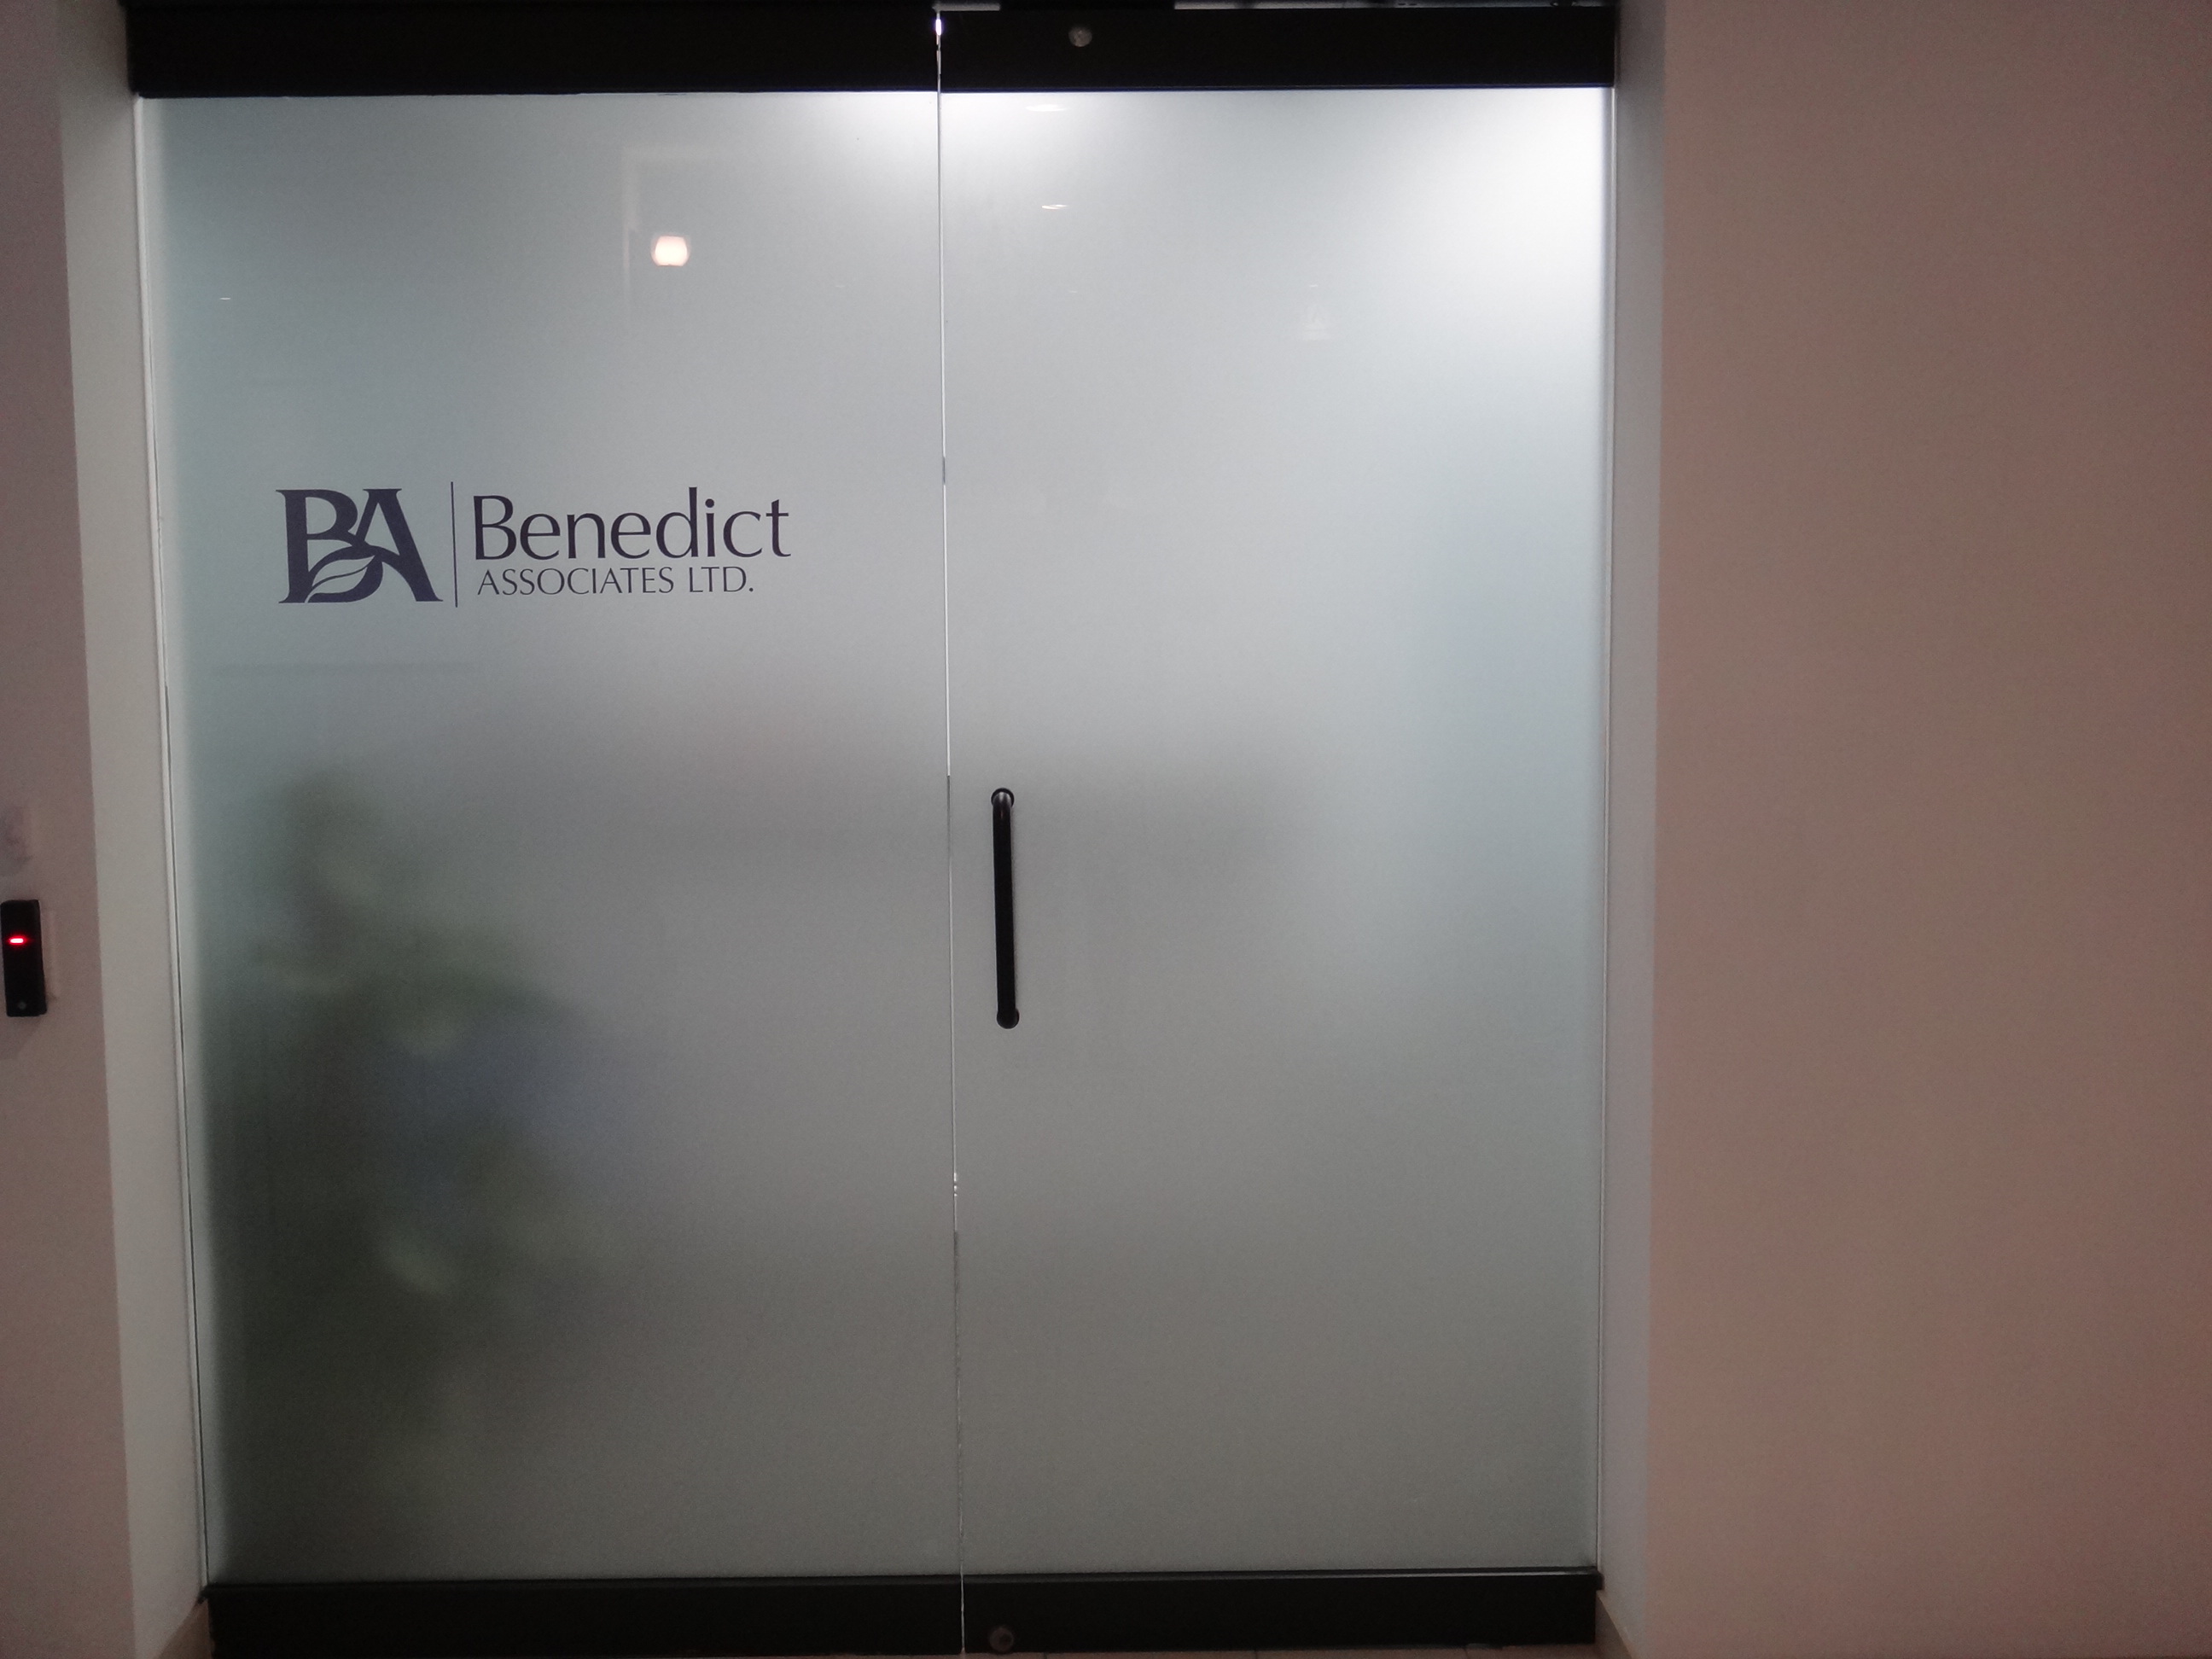 Benedict Associates Ltd.